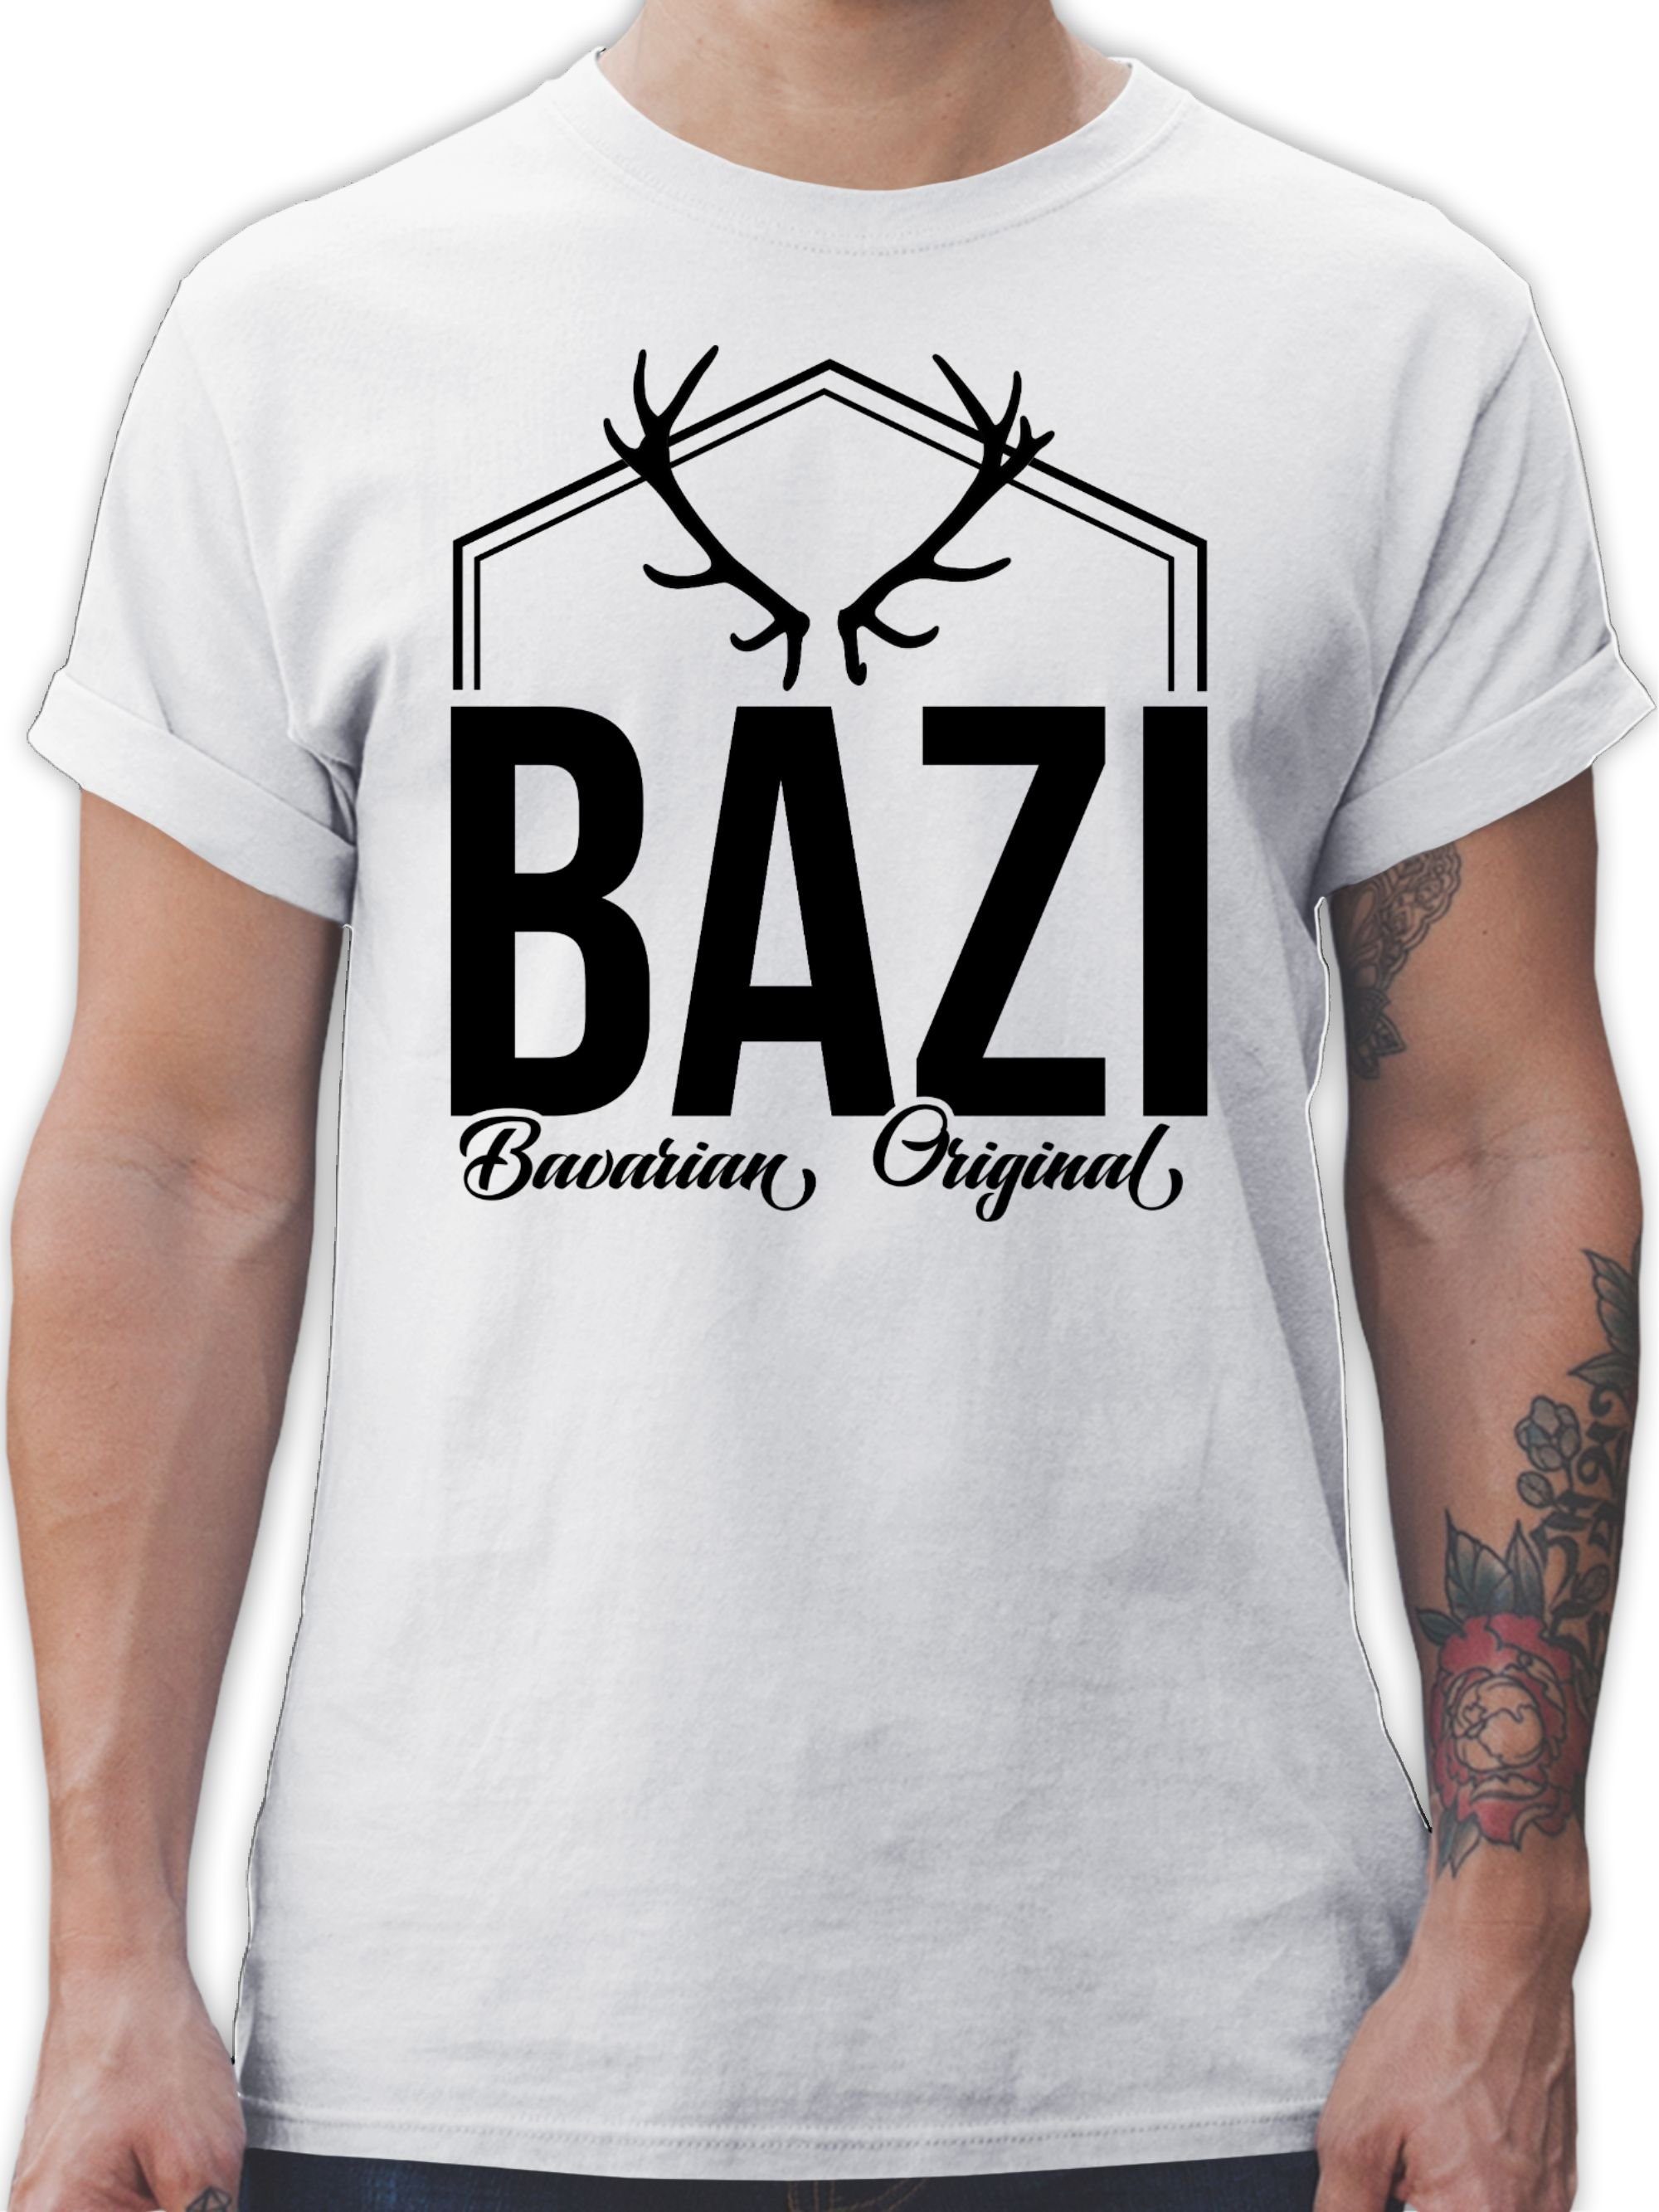 Shirtracer T-Shirt Bazi - Original Bavarian Bayern Männer 3 Weiß